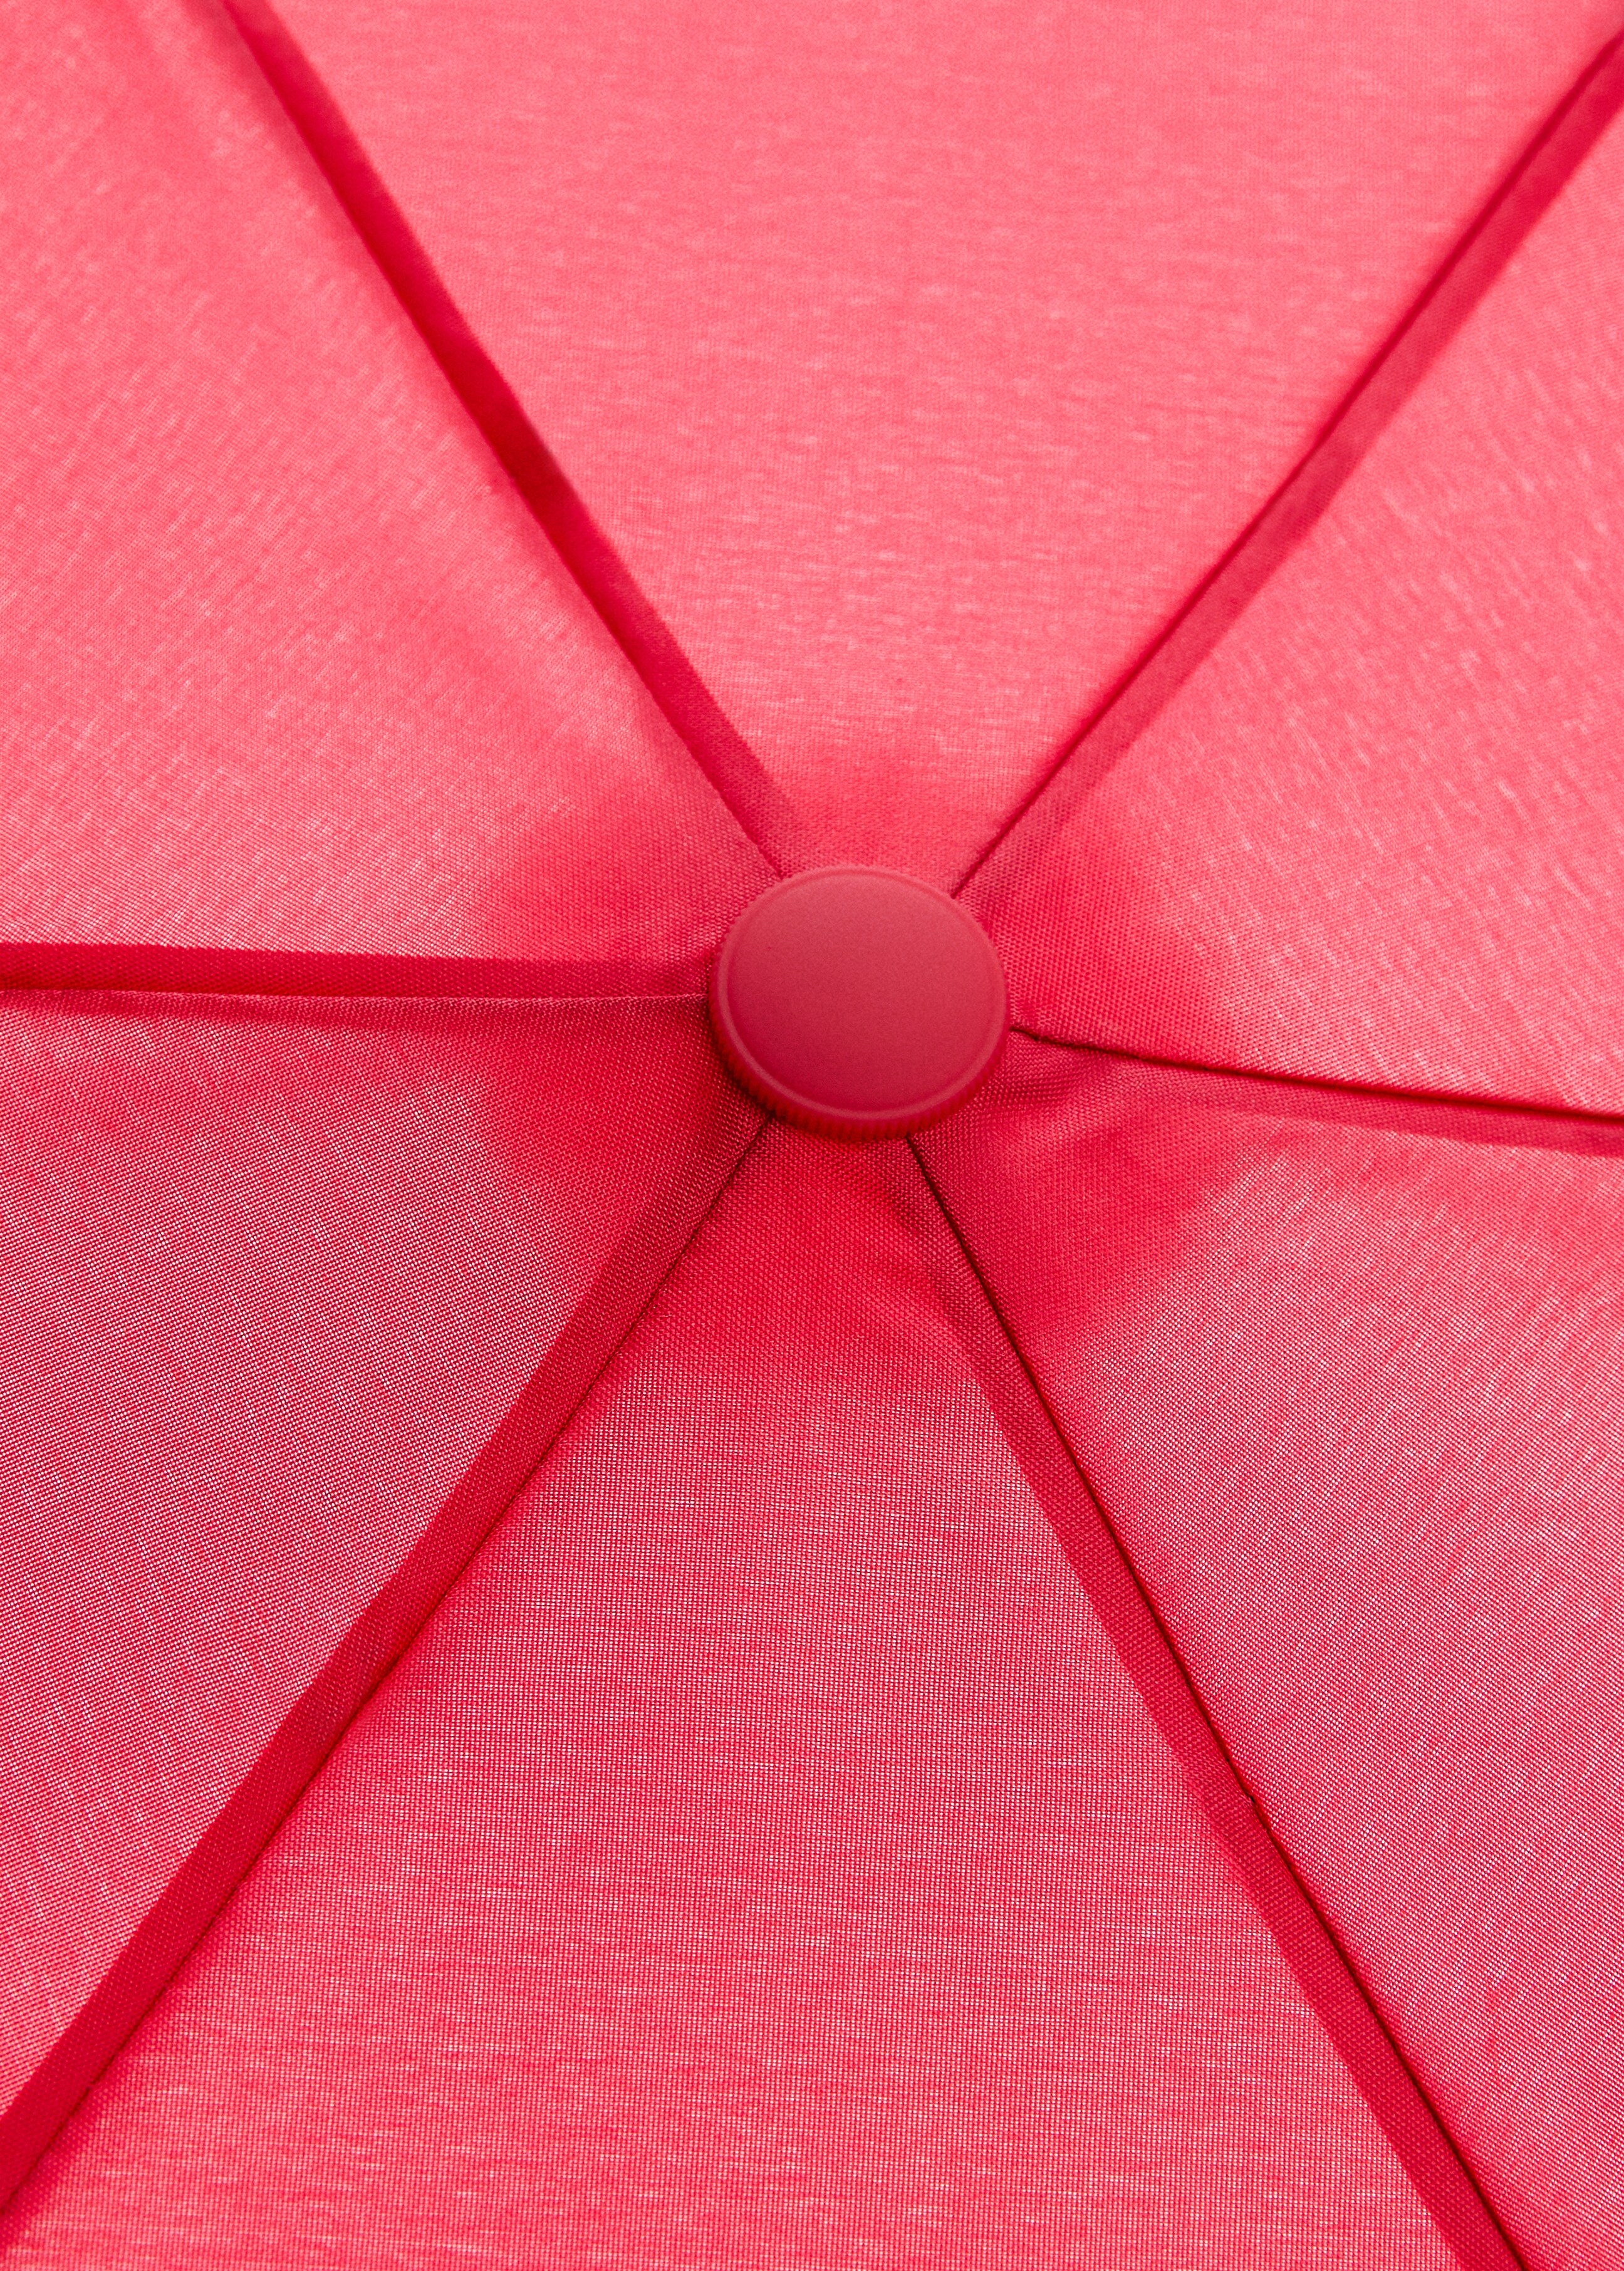 Mini folding umbrella - Details of the article 2